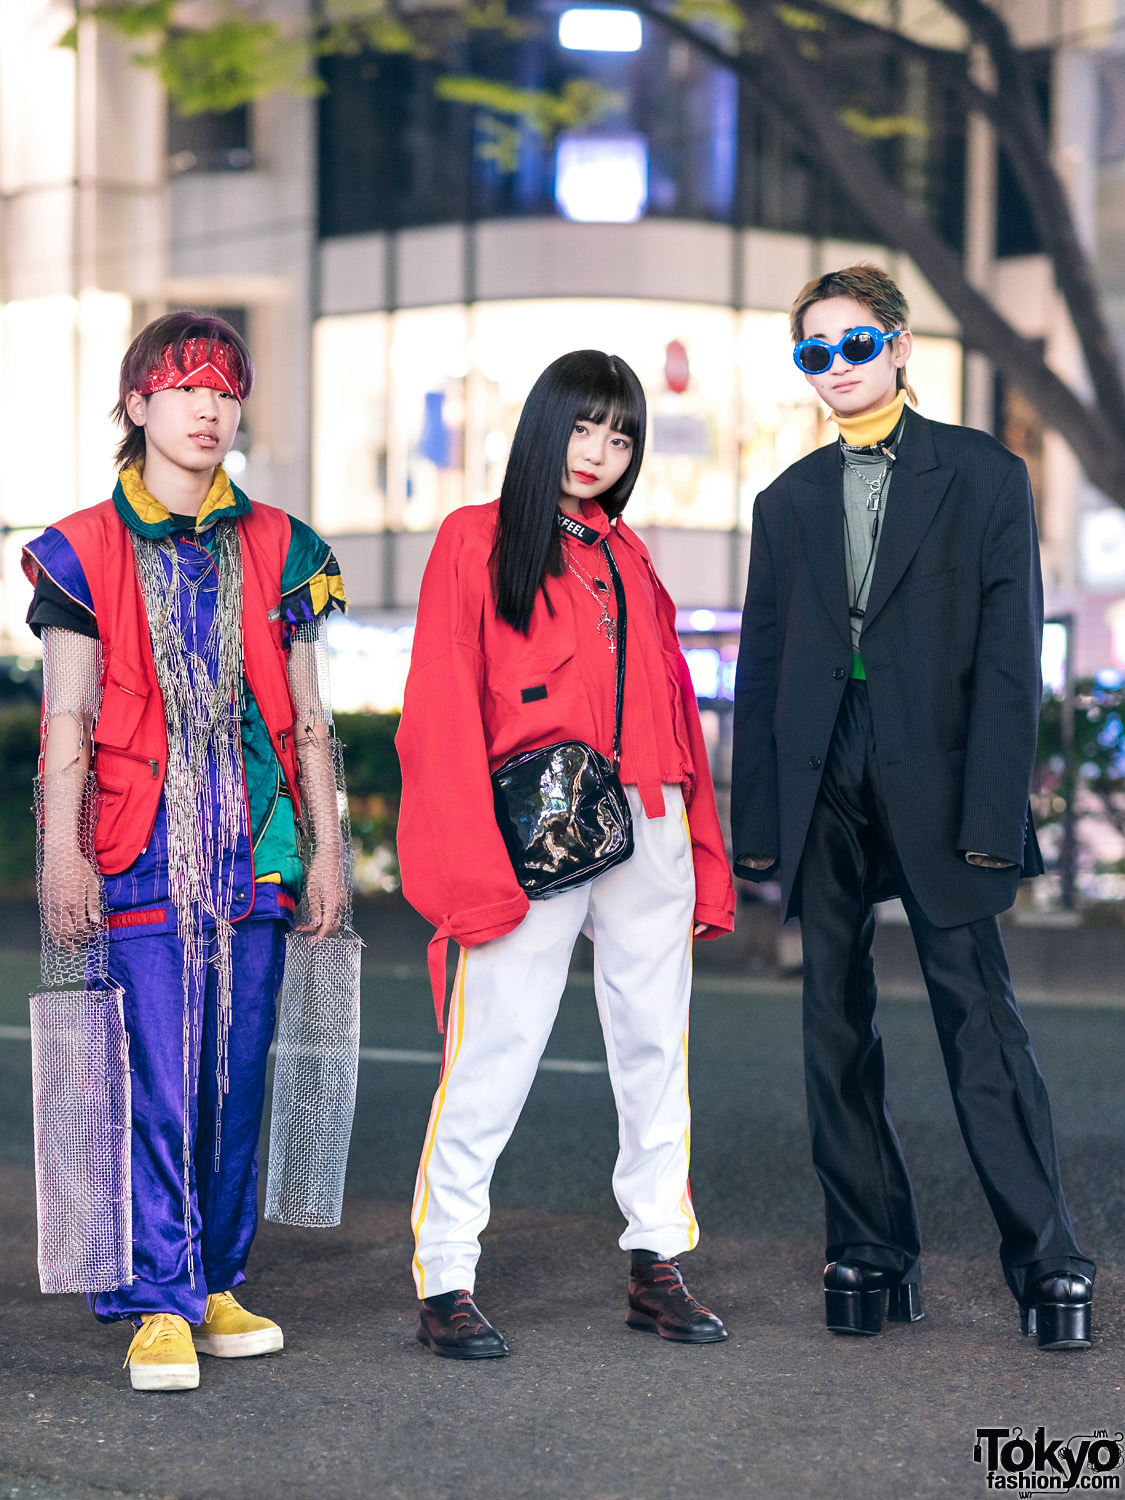 tokyo-fashion:  16-year-old Japanese students Shunsuke, Mami Creamy, and Shochan